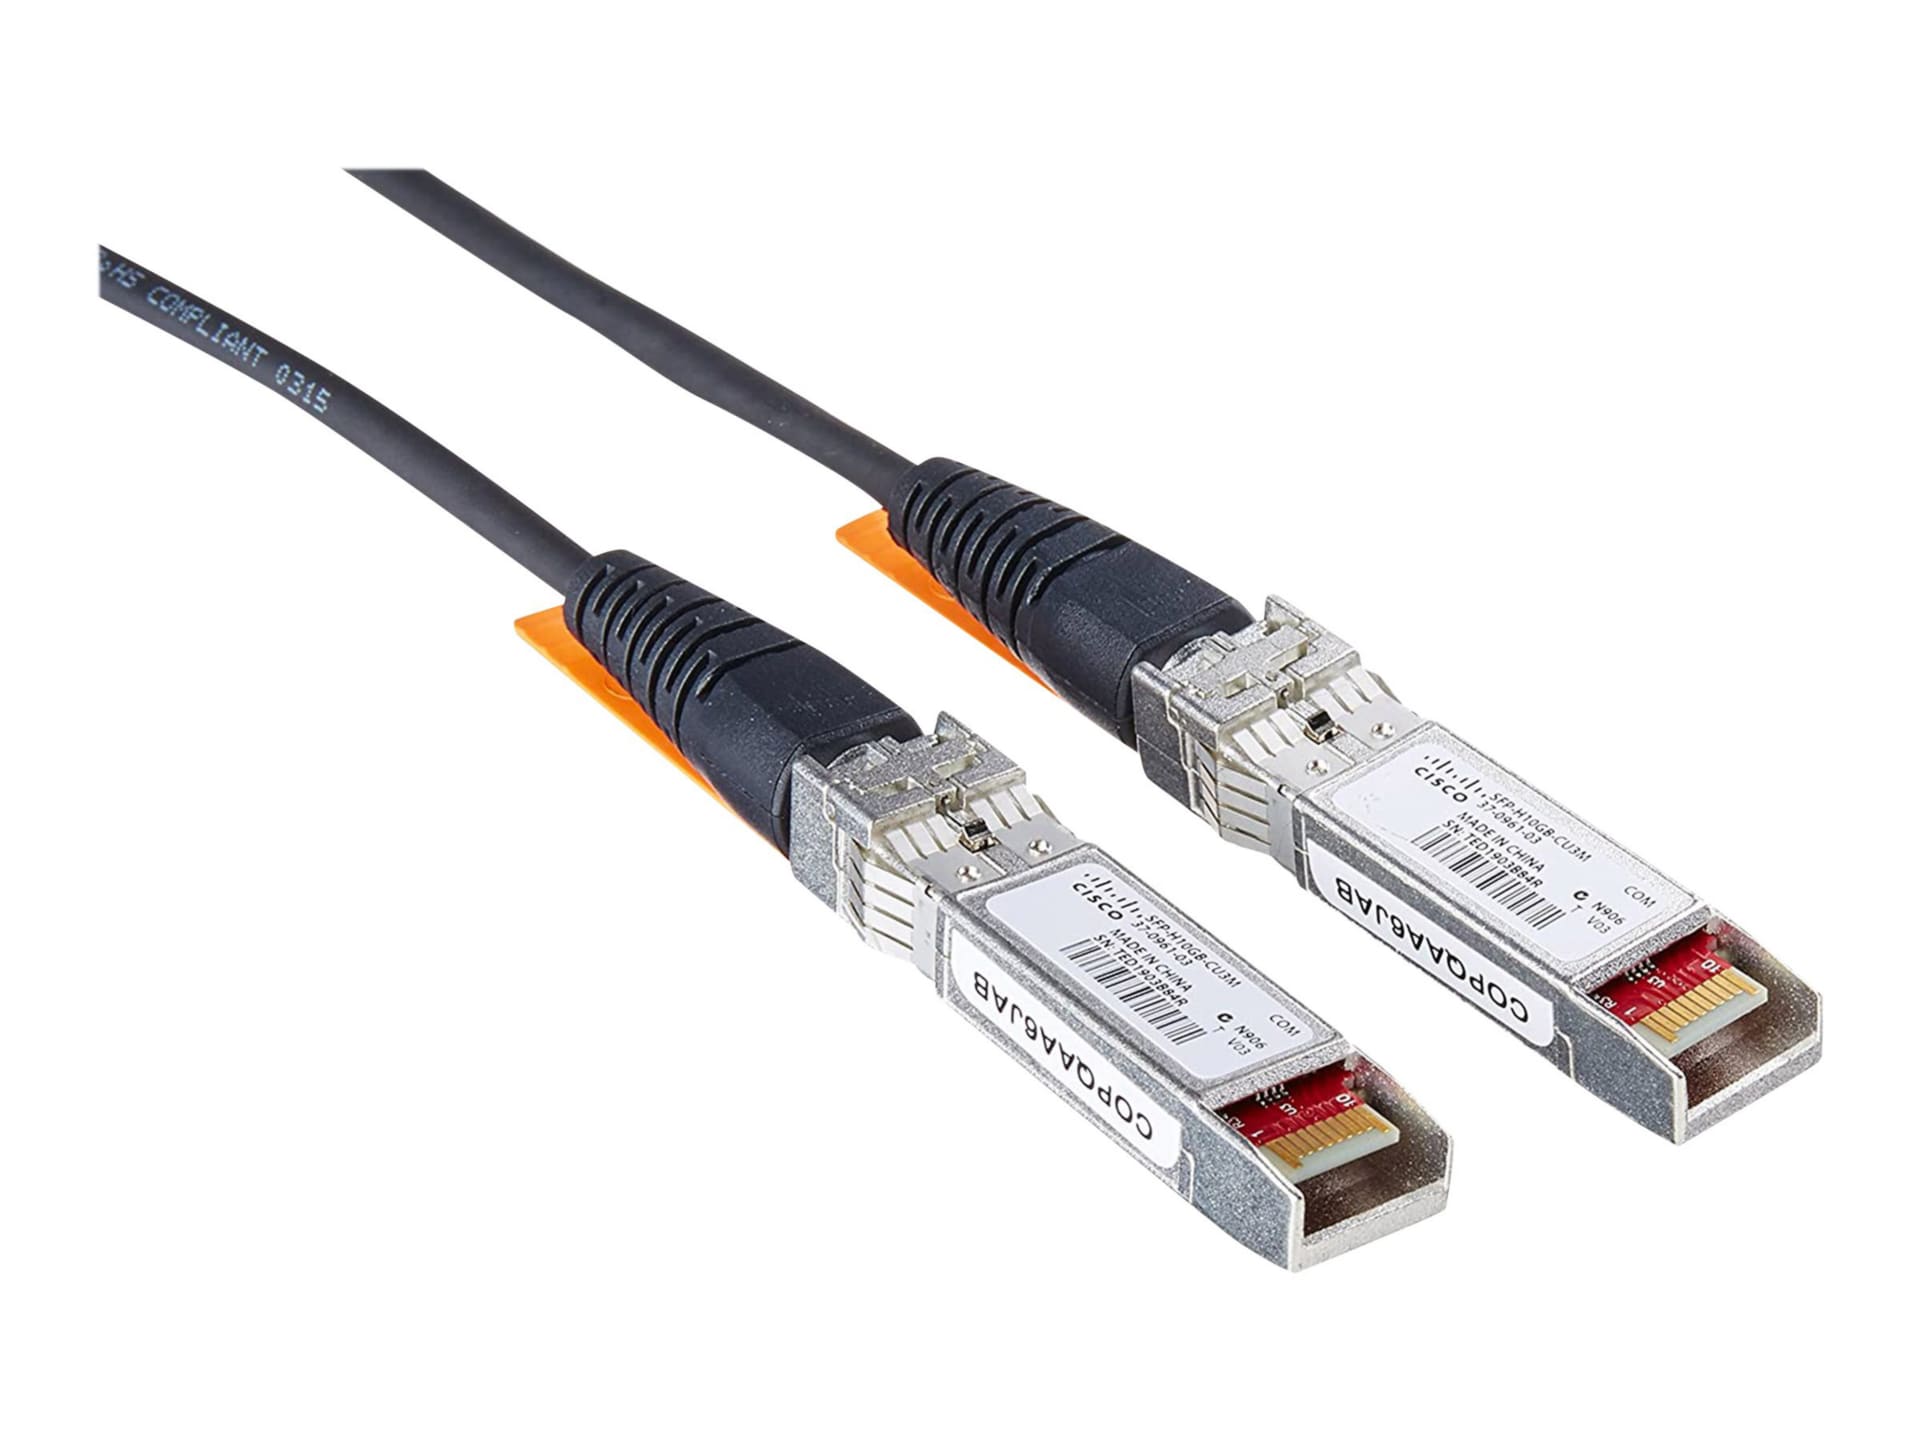 Cisco SFP+ Copper Twinax Cable - direct attach cable - 10 ft